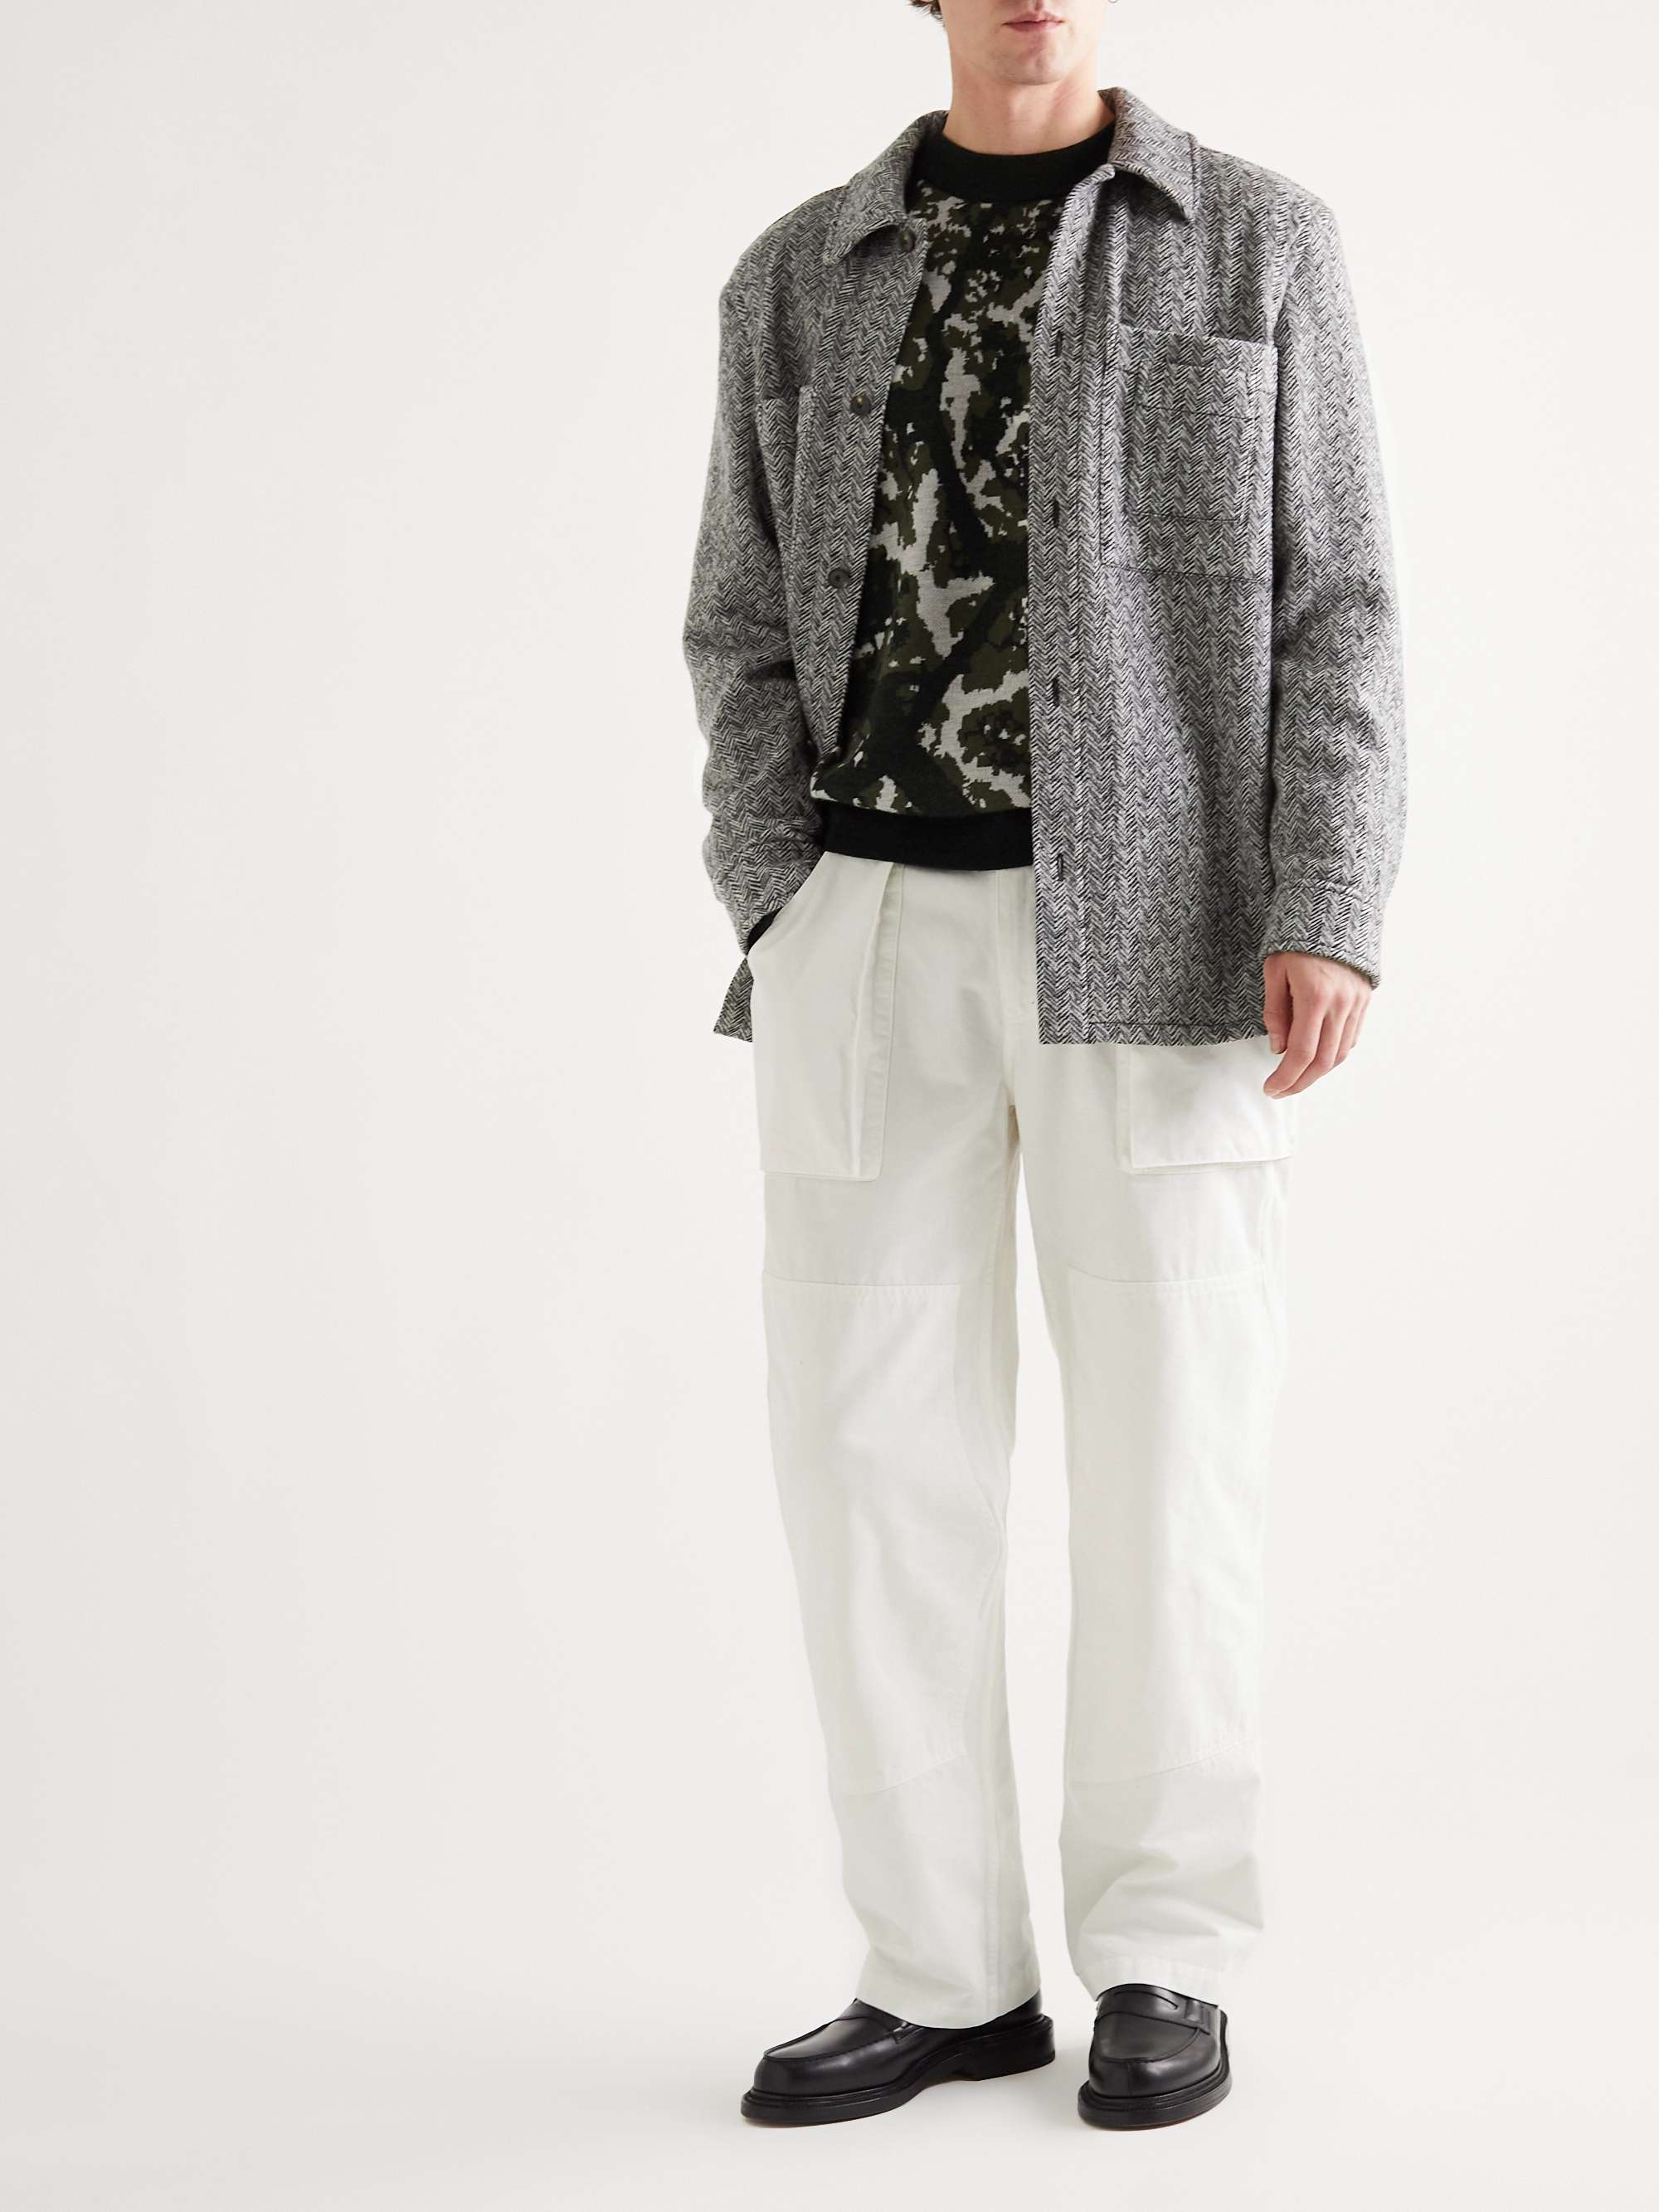 MILES LEON Herringbone Wool and Cashmere-Blend Overshirt for Men | MR PORTER